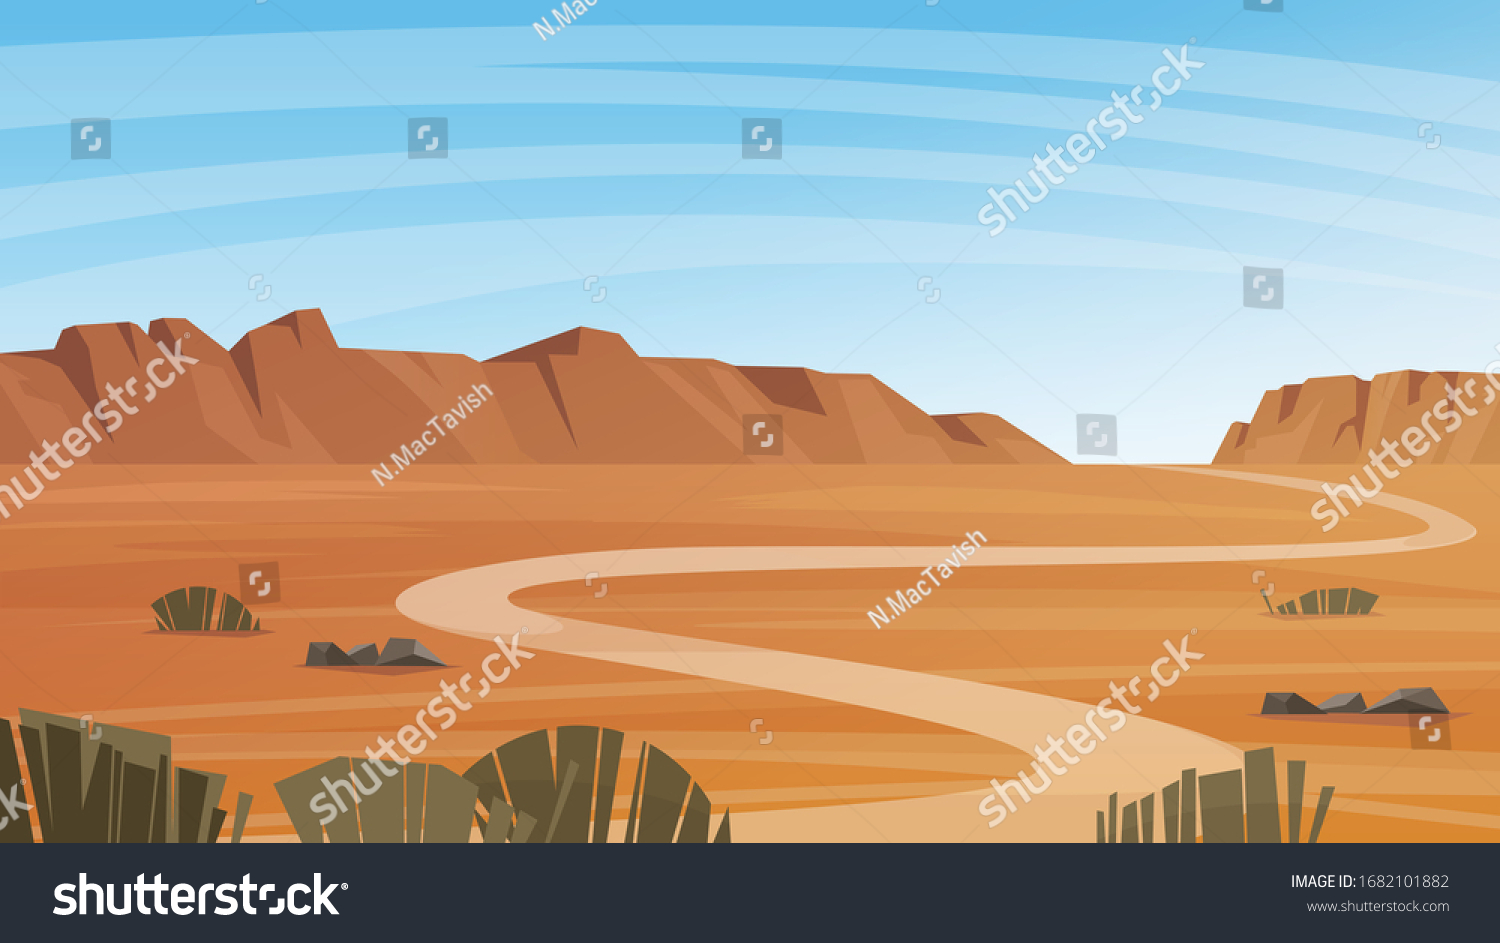 Grand Canyon desert landscape vector illustration.